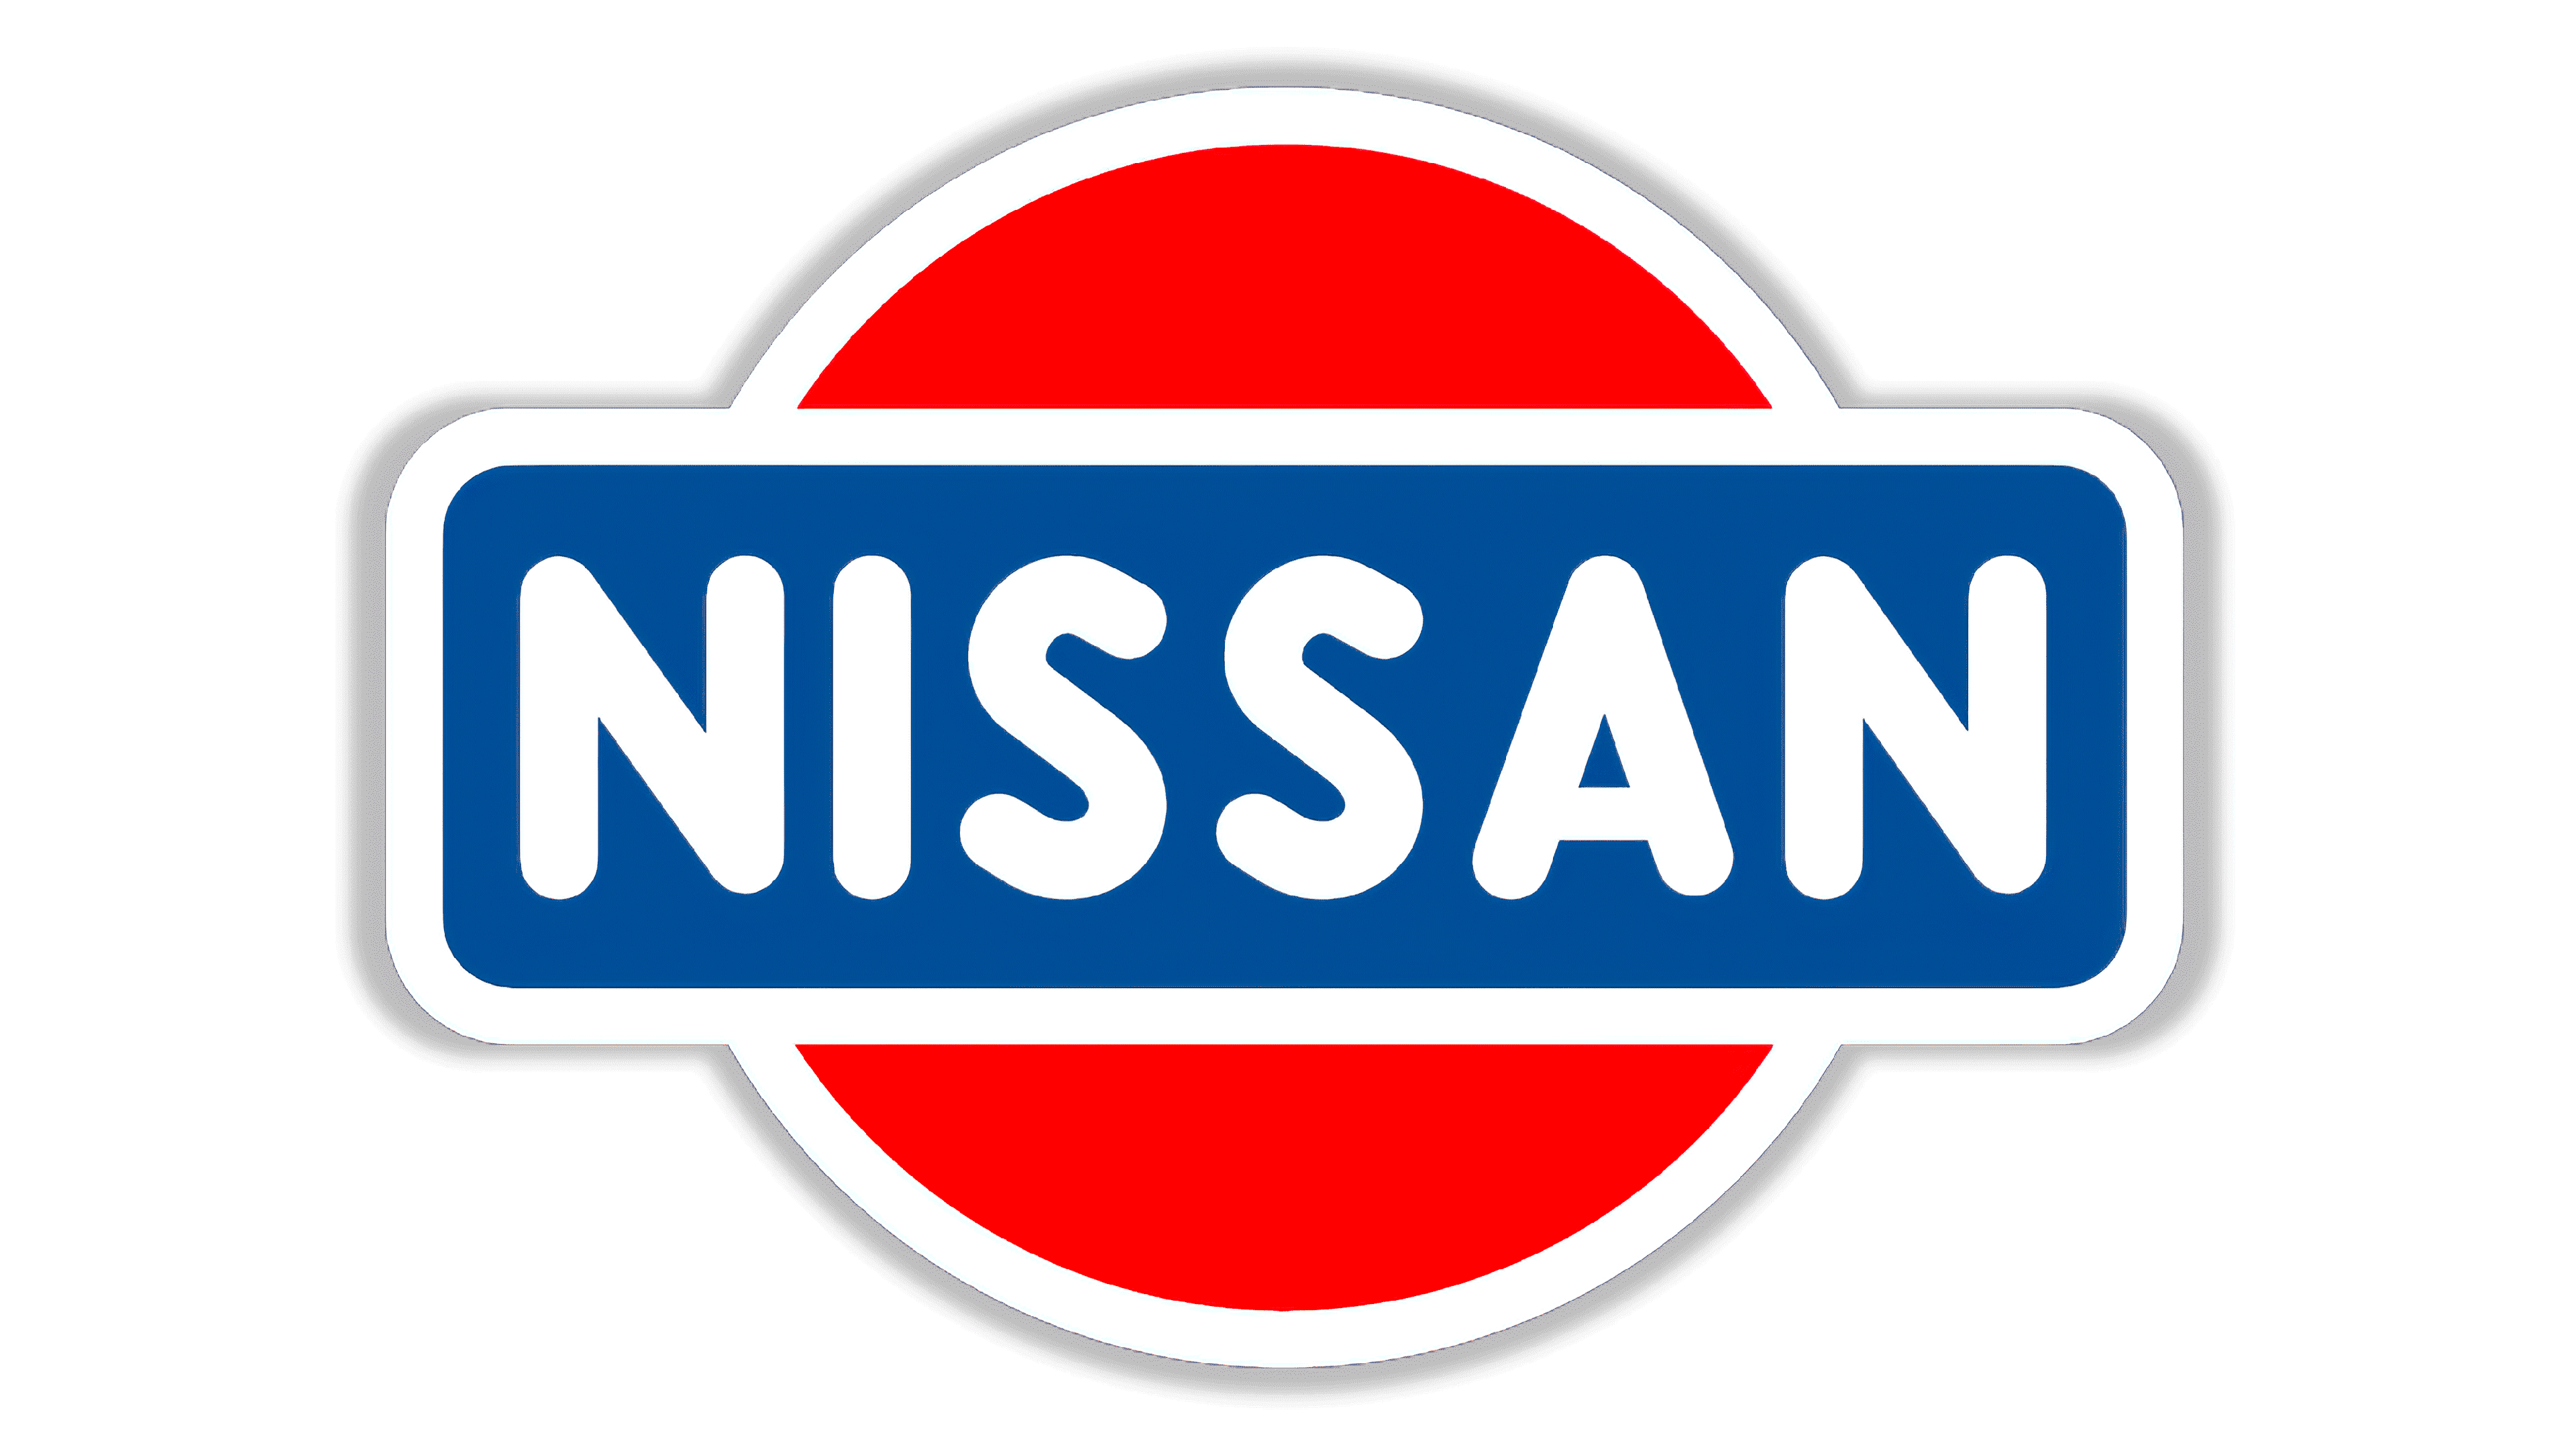 nissan logo iphone wallpaper